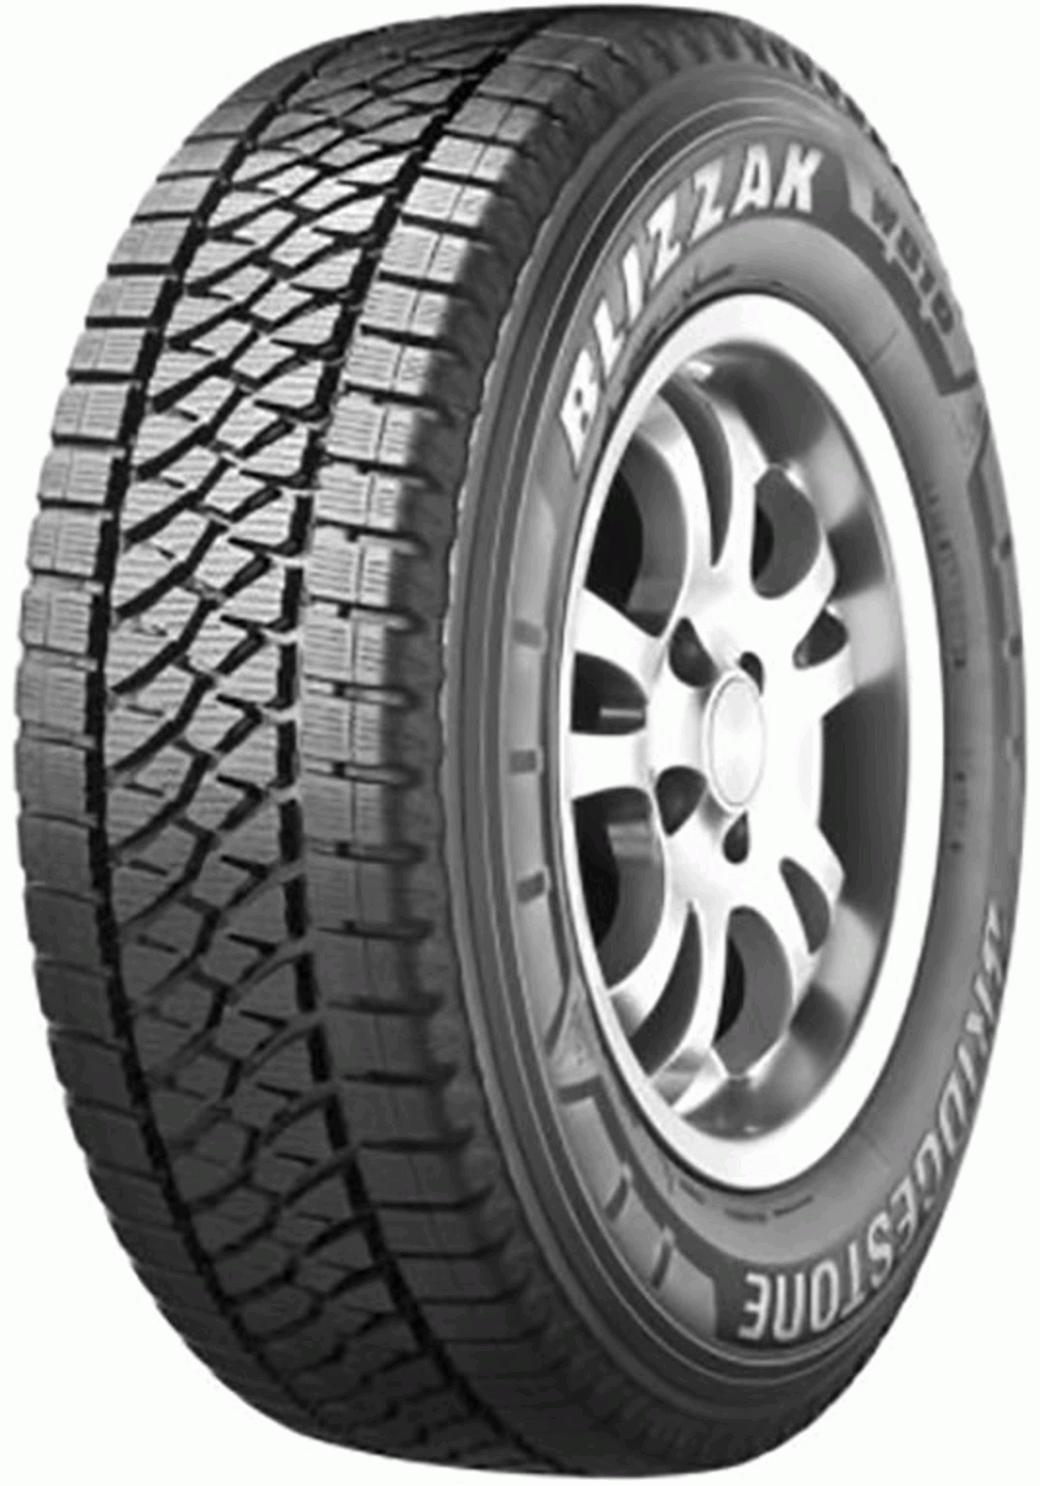 Bridgestone Blizzak W810 - Tyre and Reviews Tests